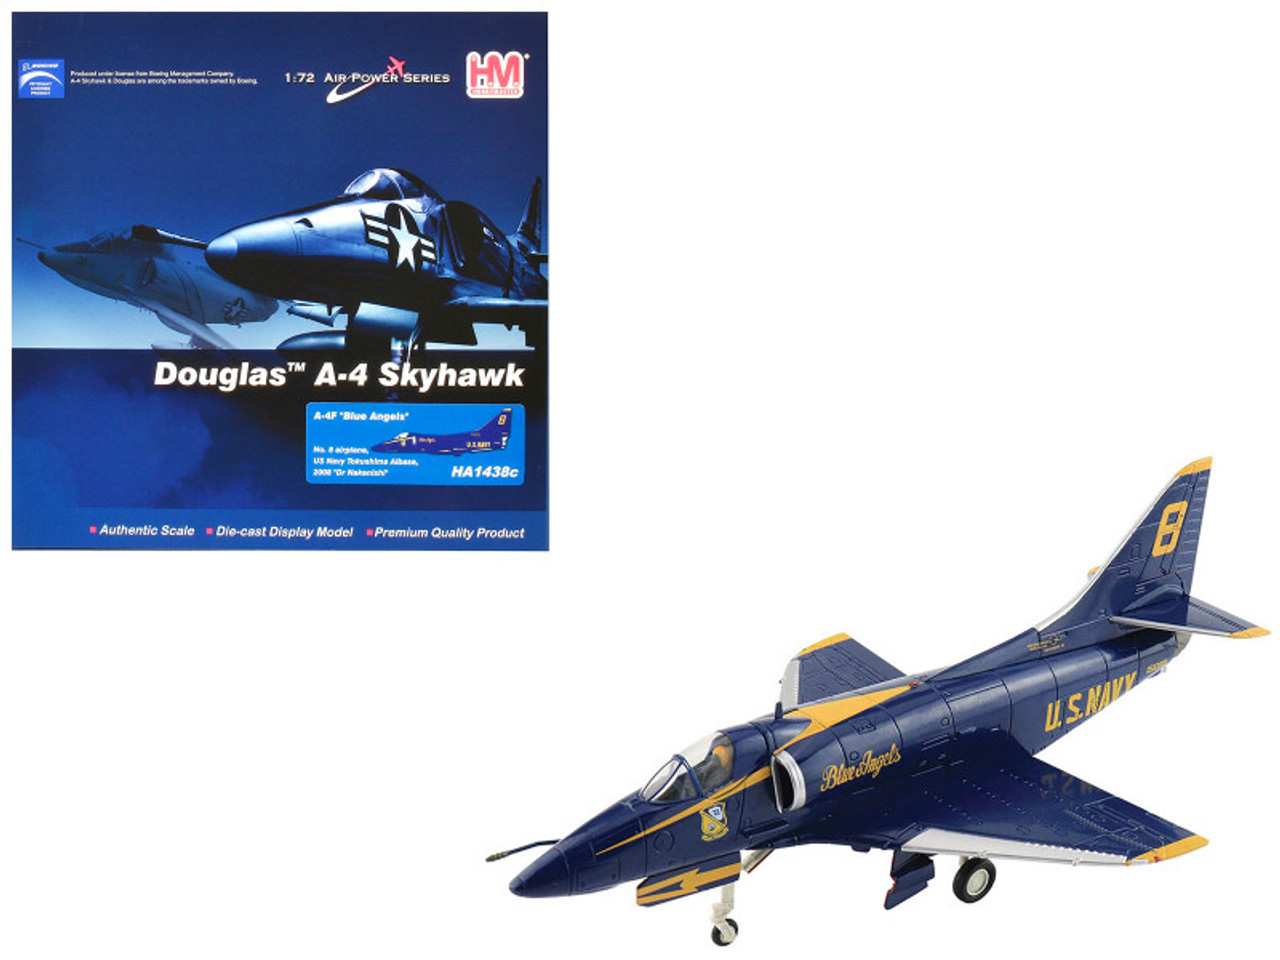 Douglas A-4F Skyhawk Aircraft "Blue Angels Tokushima Airbase Dr. Nakanishi #8" (2008) United States Navy "Air Power Series" 1/72 Diecast Model by Hobby Master